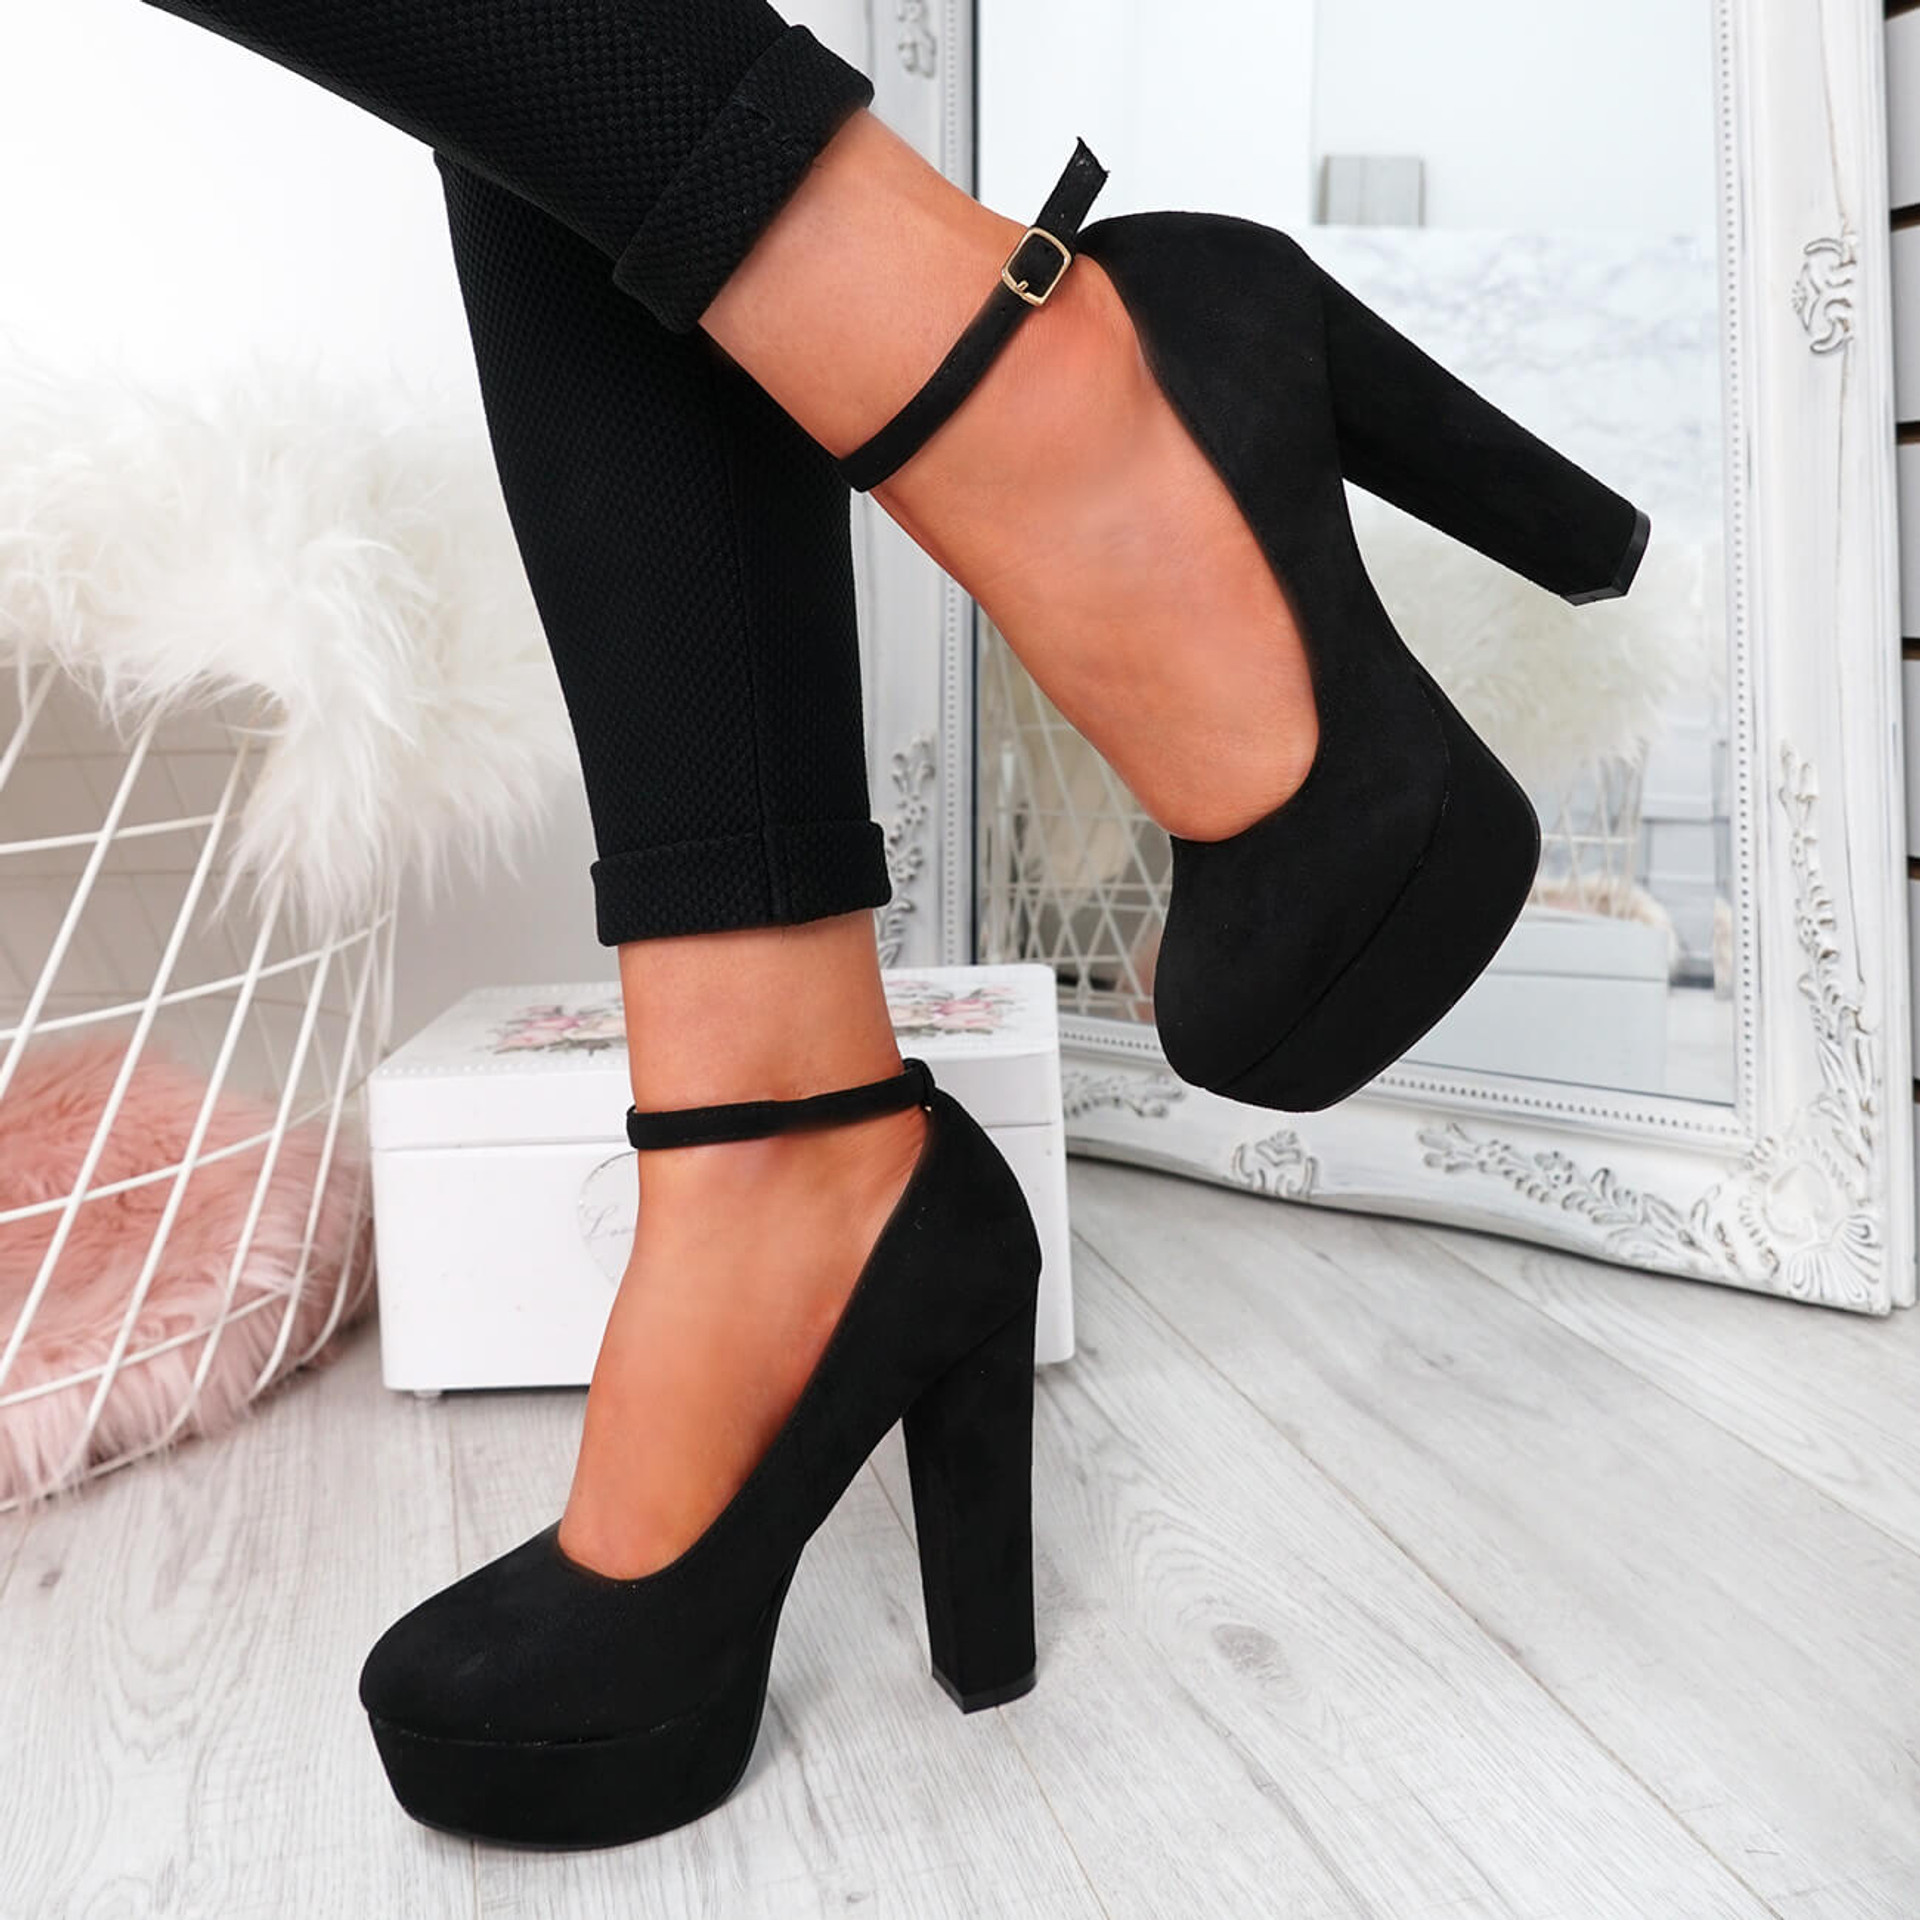 Black Strappy Criss Cross Single Sole High Heels Suede | Heels, Black high  heels, Prom heels